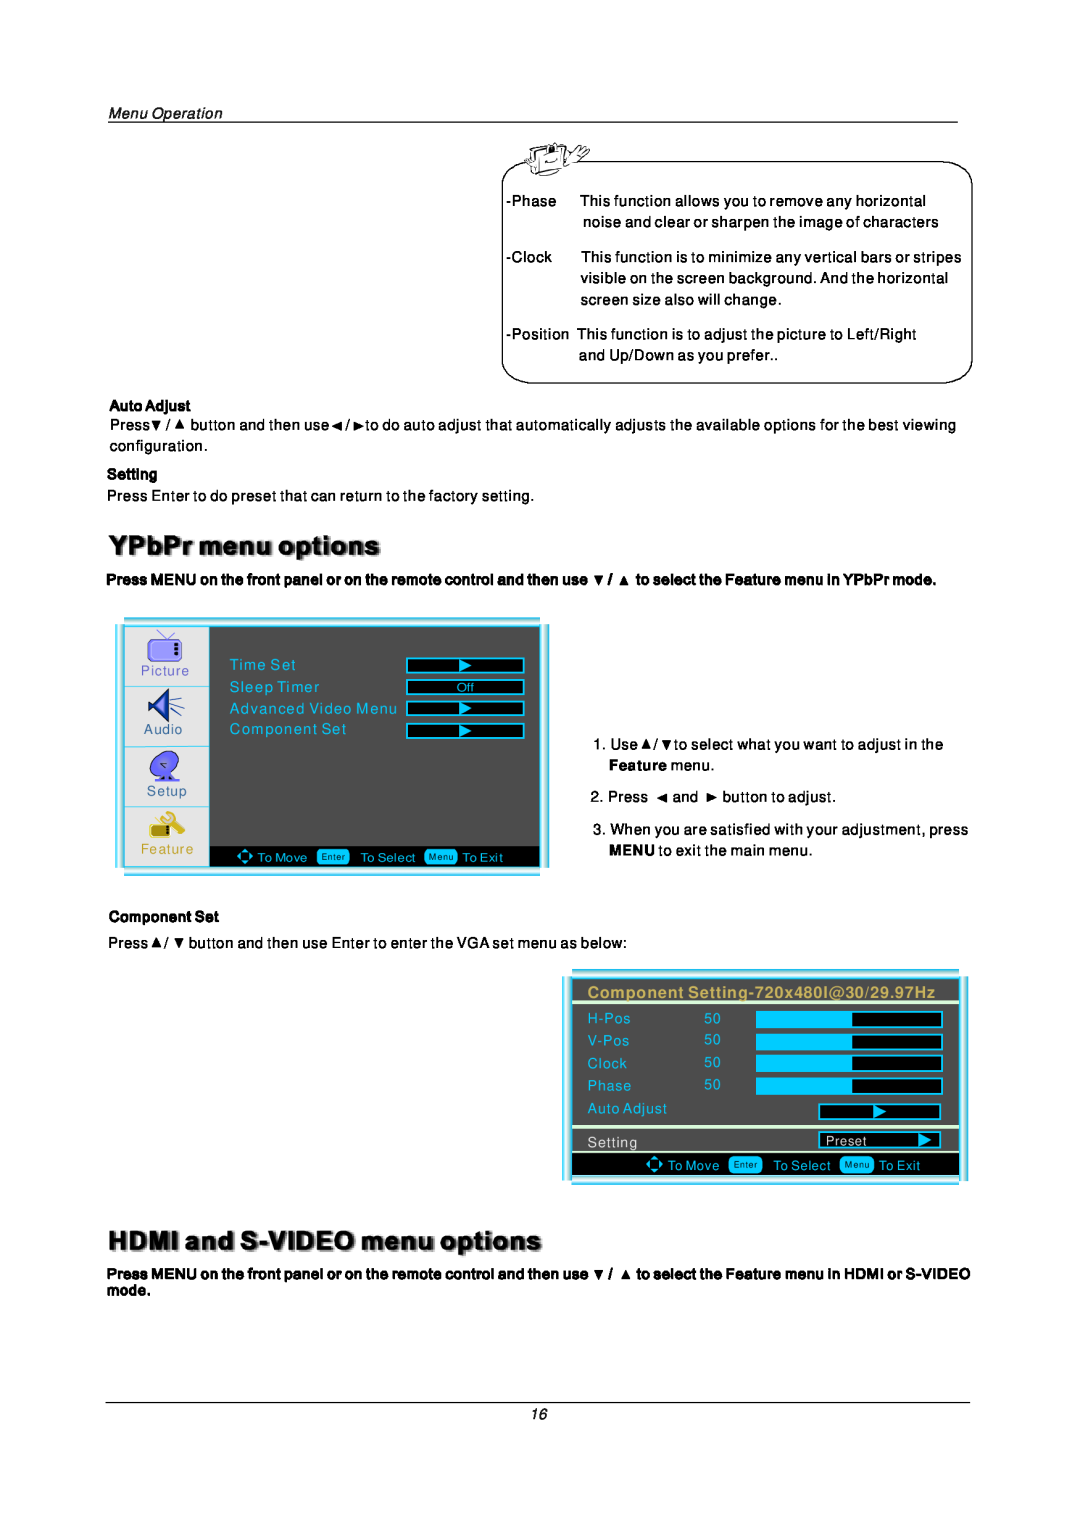 PYLE Audio PTC40LC manual Menu Operation, Component Setting-720x480I@30/29.97Hz, SettingPreset 